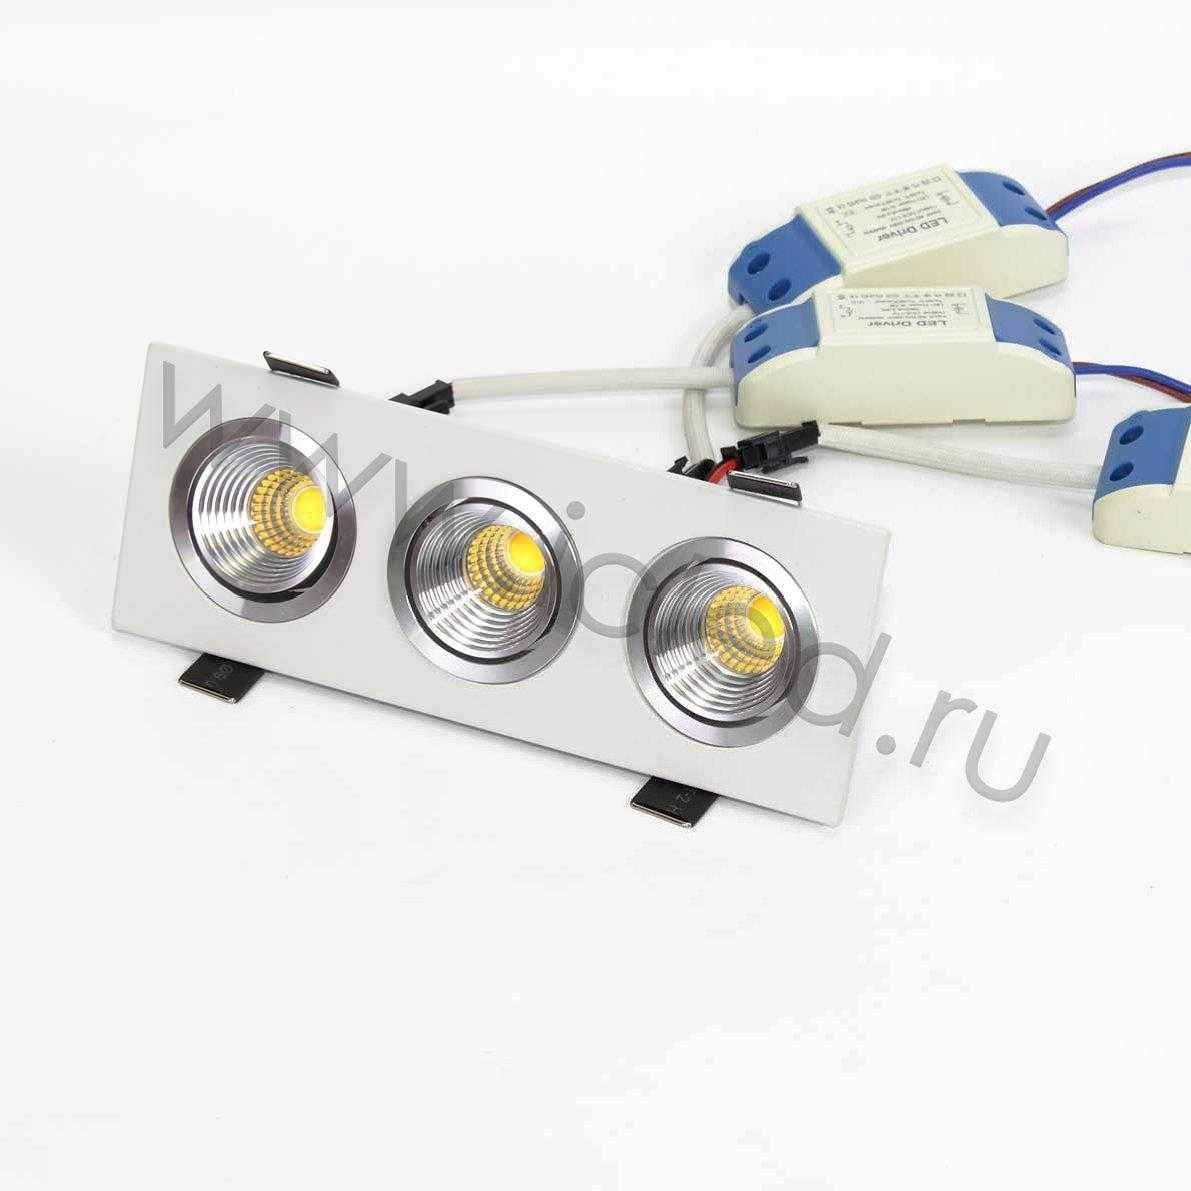 Светодиодные светильники Светодиодный светильник встраиваемый 65.3 series white housing BW146 (10W,220V,day white)